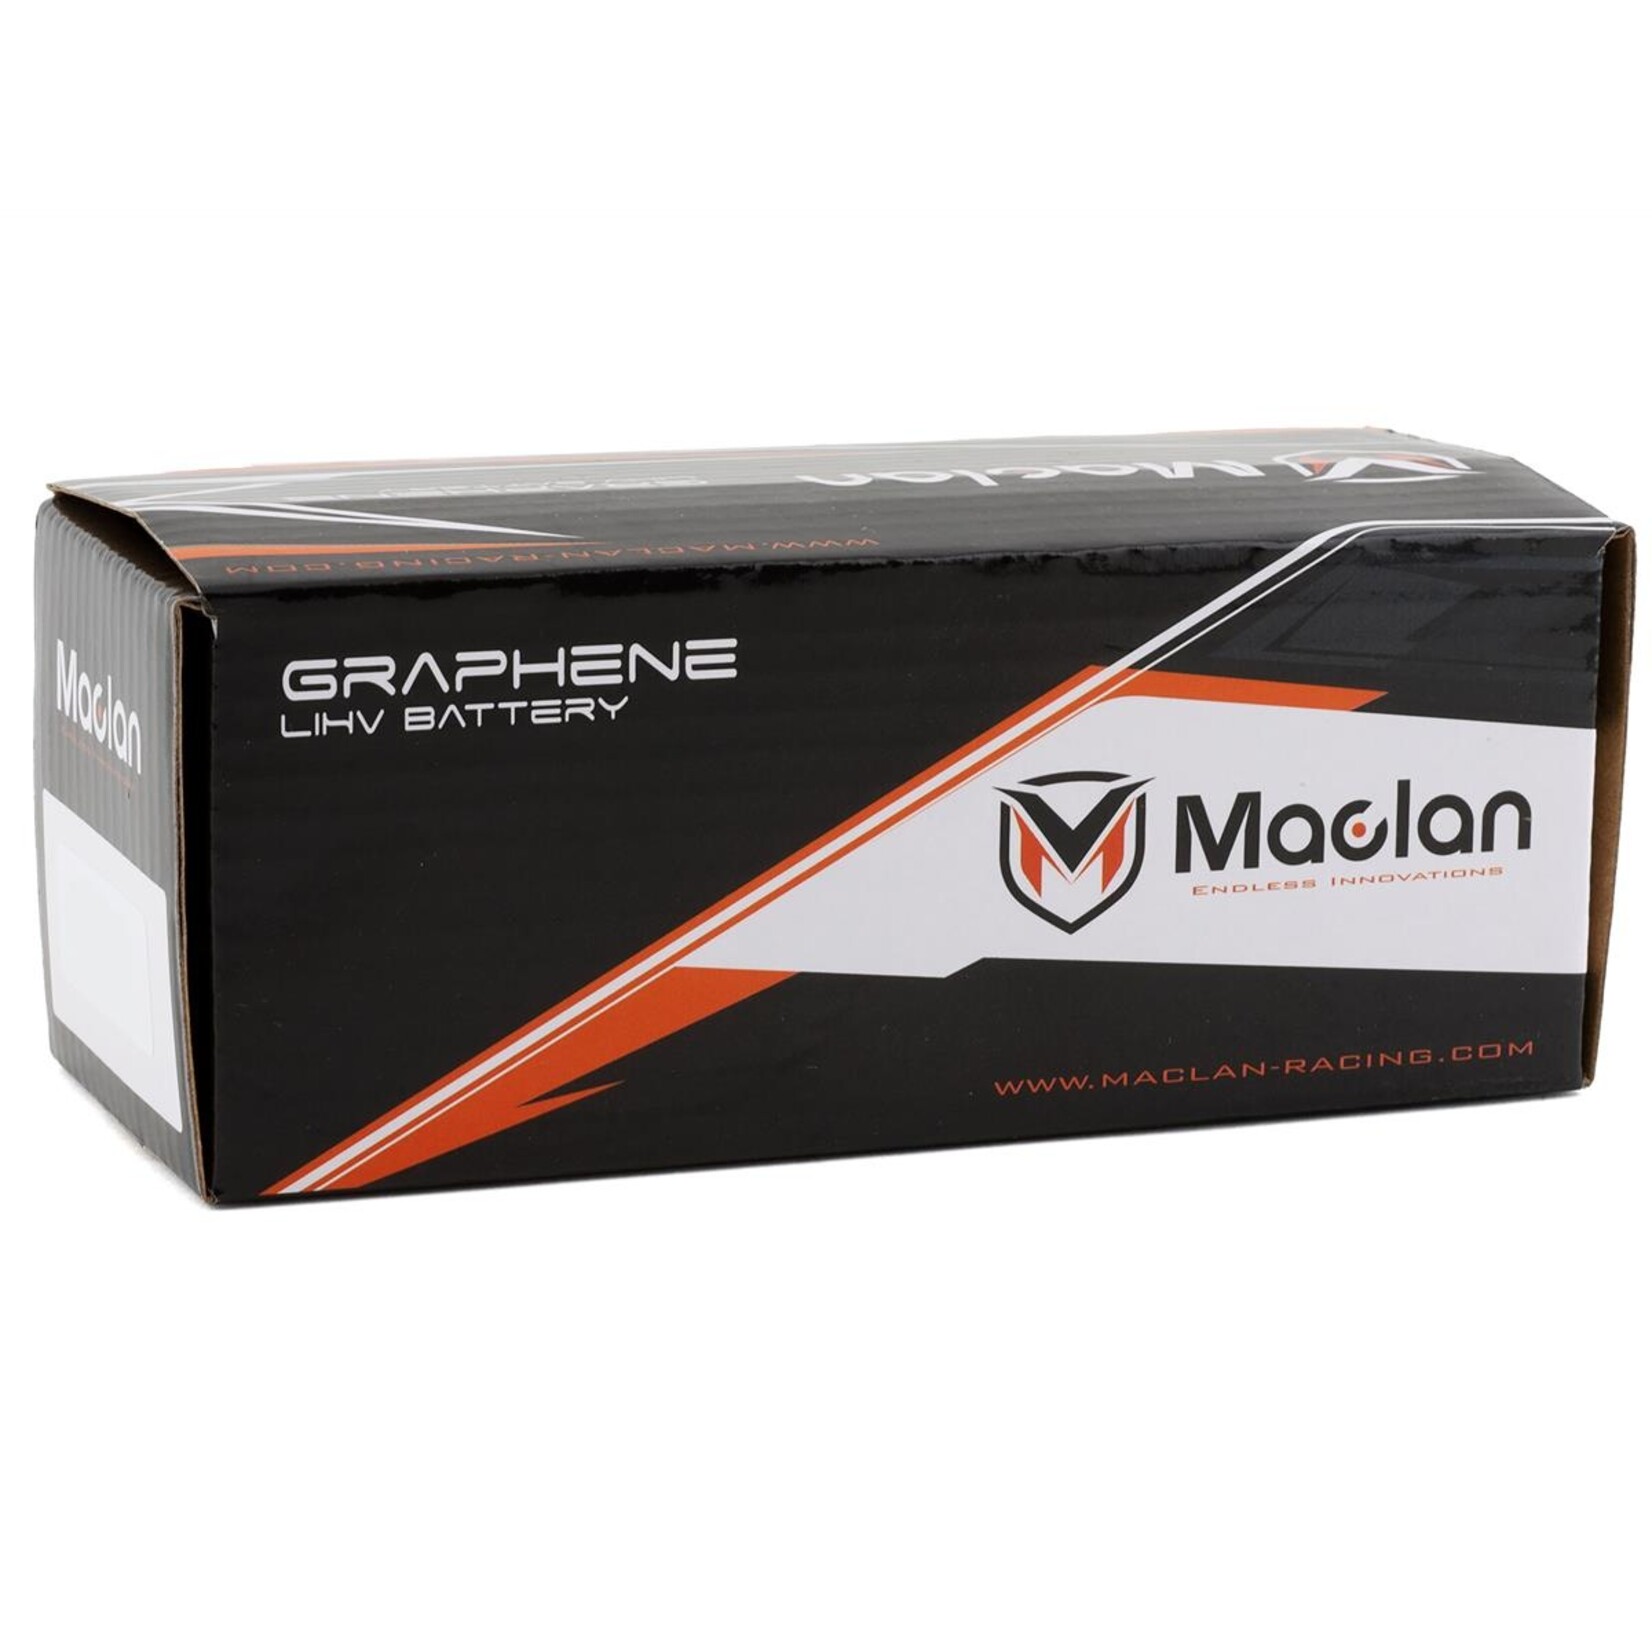 Maclan Maclan Extreme Drag Race Graphene 2S 200C LiPo Battery (7.4V/8800mAh) w/8mm Bullets #MCL6036